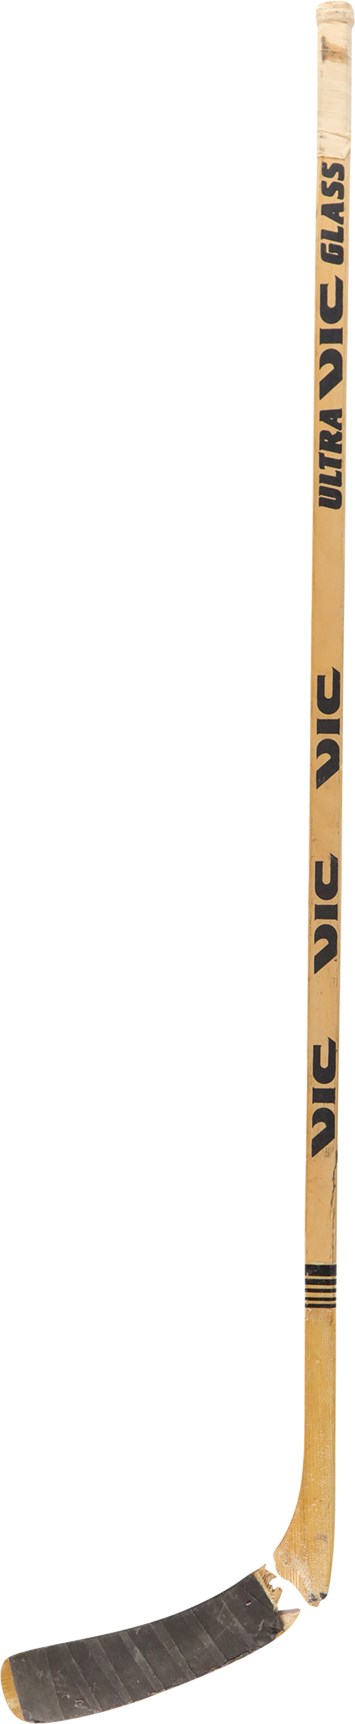 Hockey - Early Phil Housley Game Used Hockey Stick